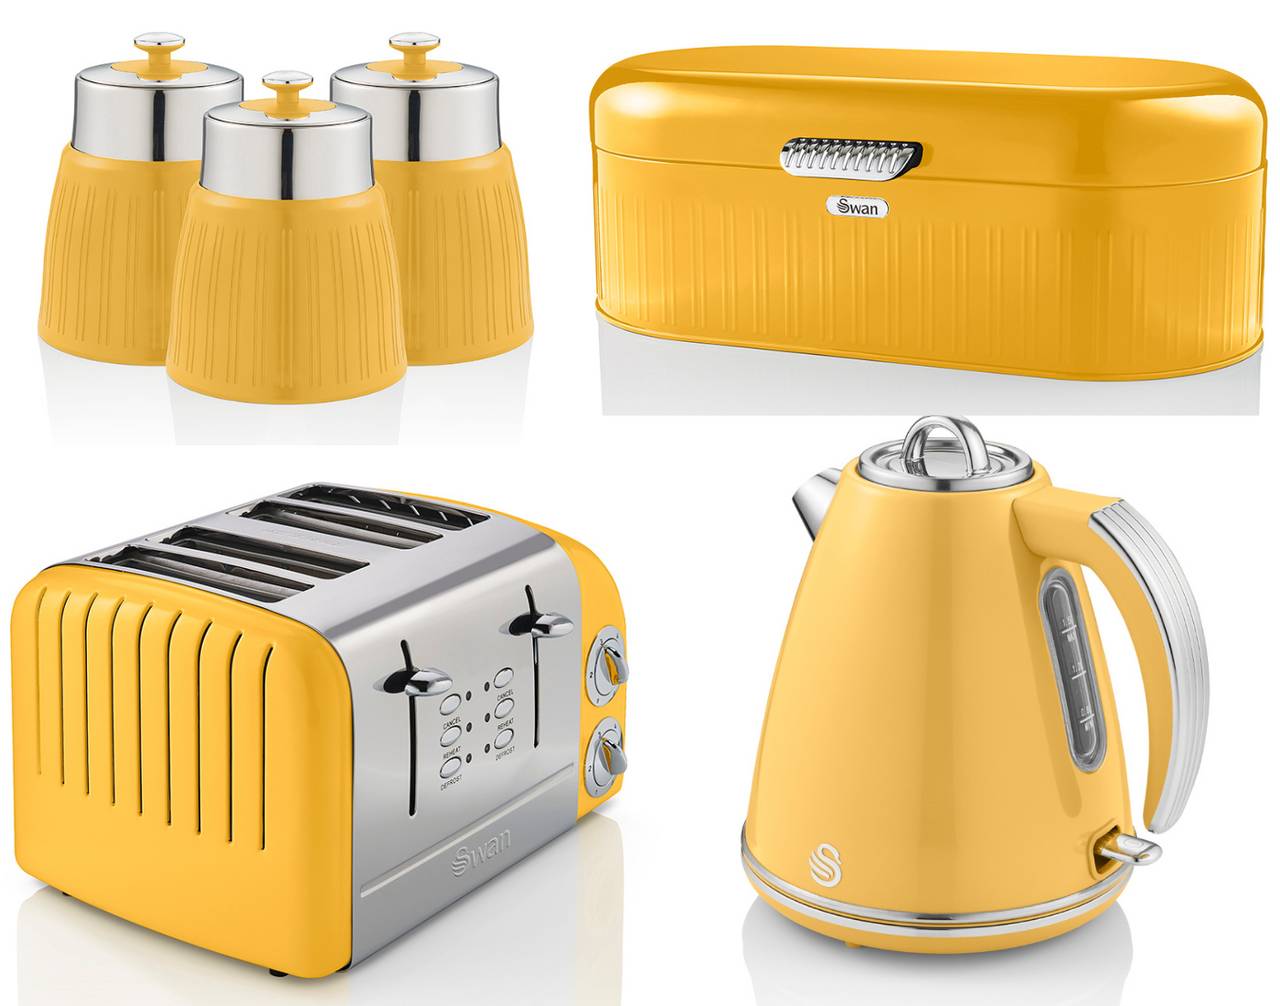 Swan Retro Yellow Jug Kettle 4 Slice Toaster Bread Bin & Canisters Kitchen Set